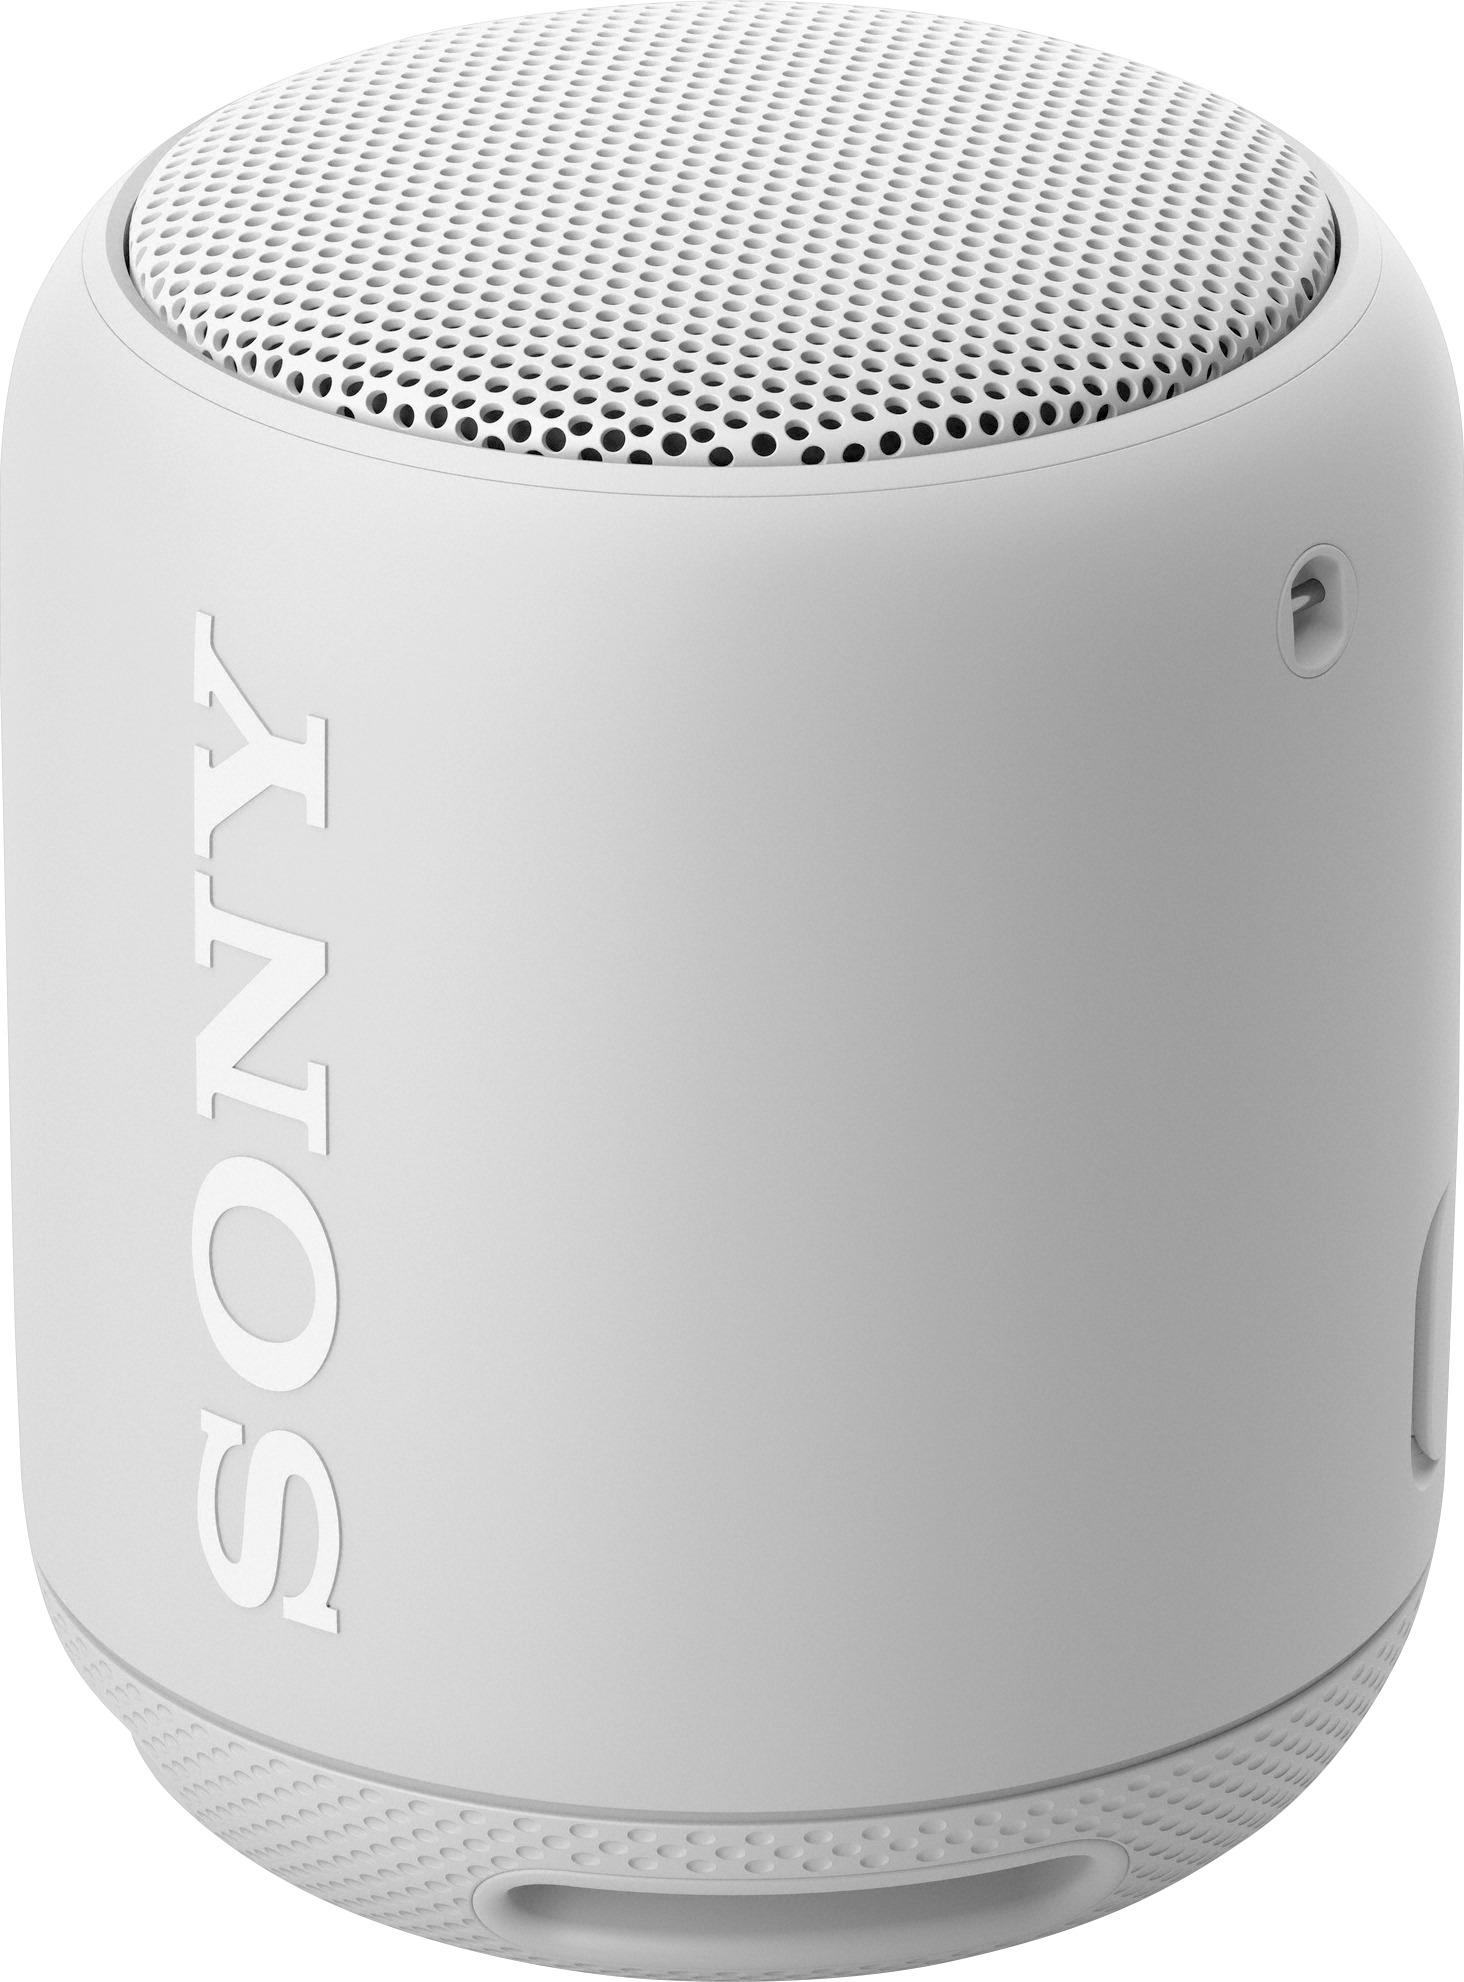 srsxb10b portable bluetooth speaker